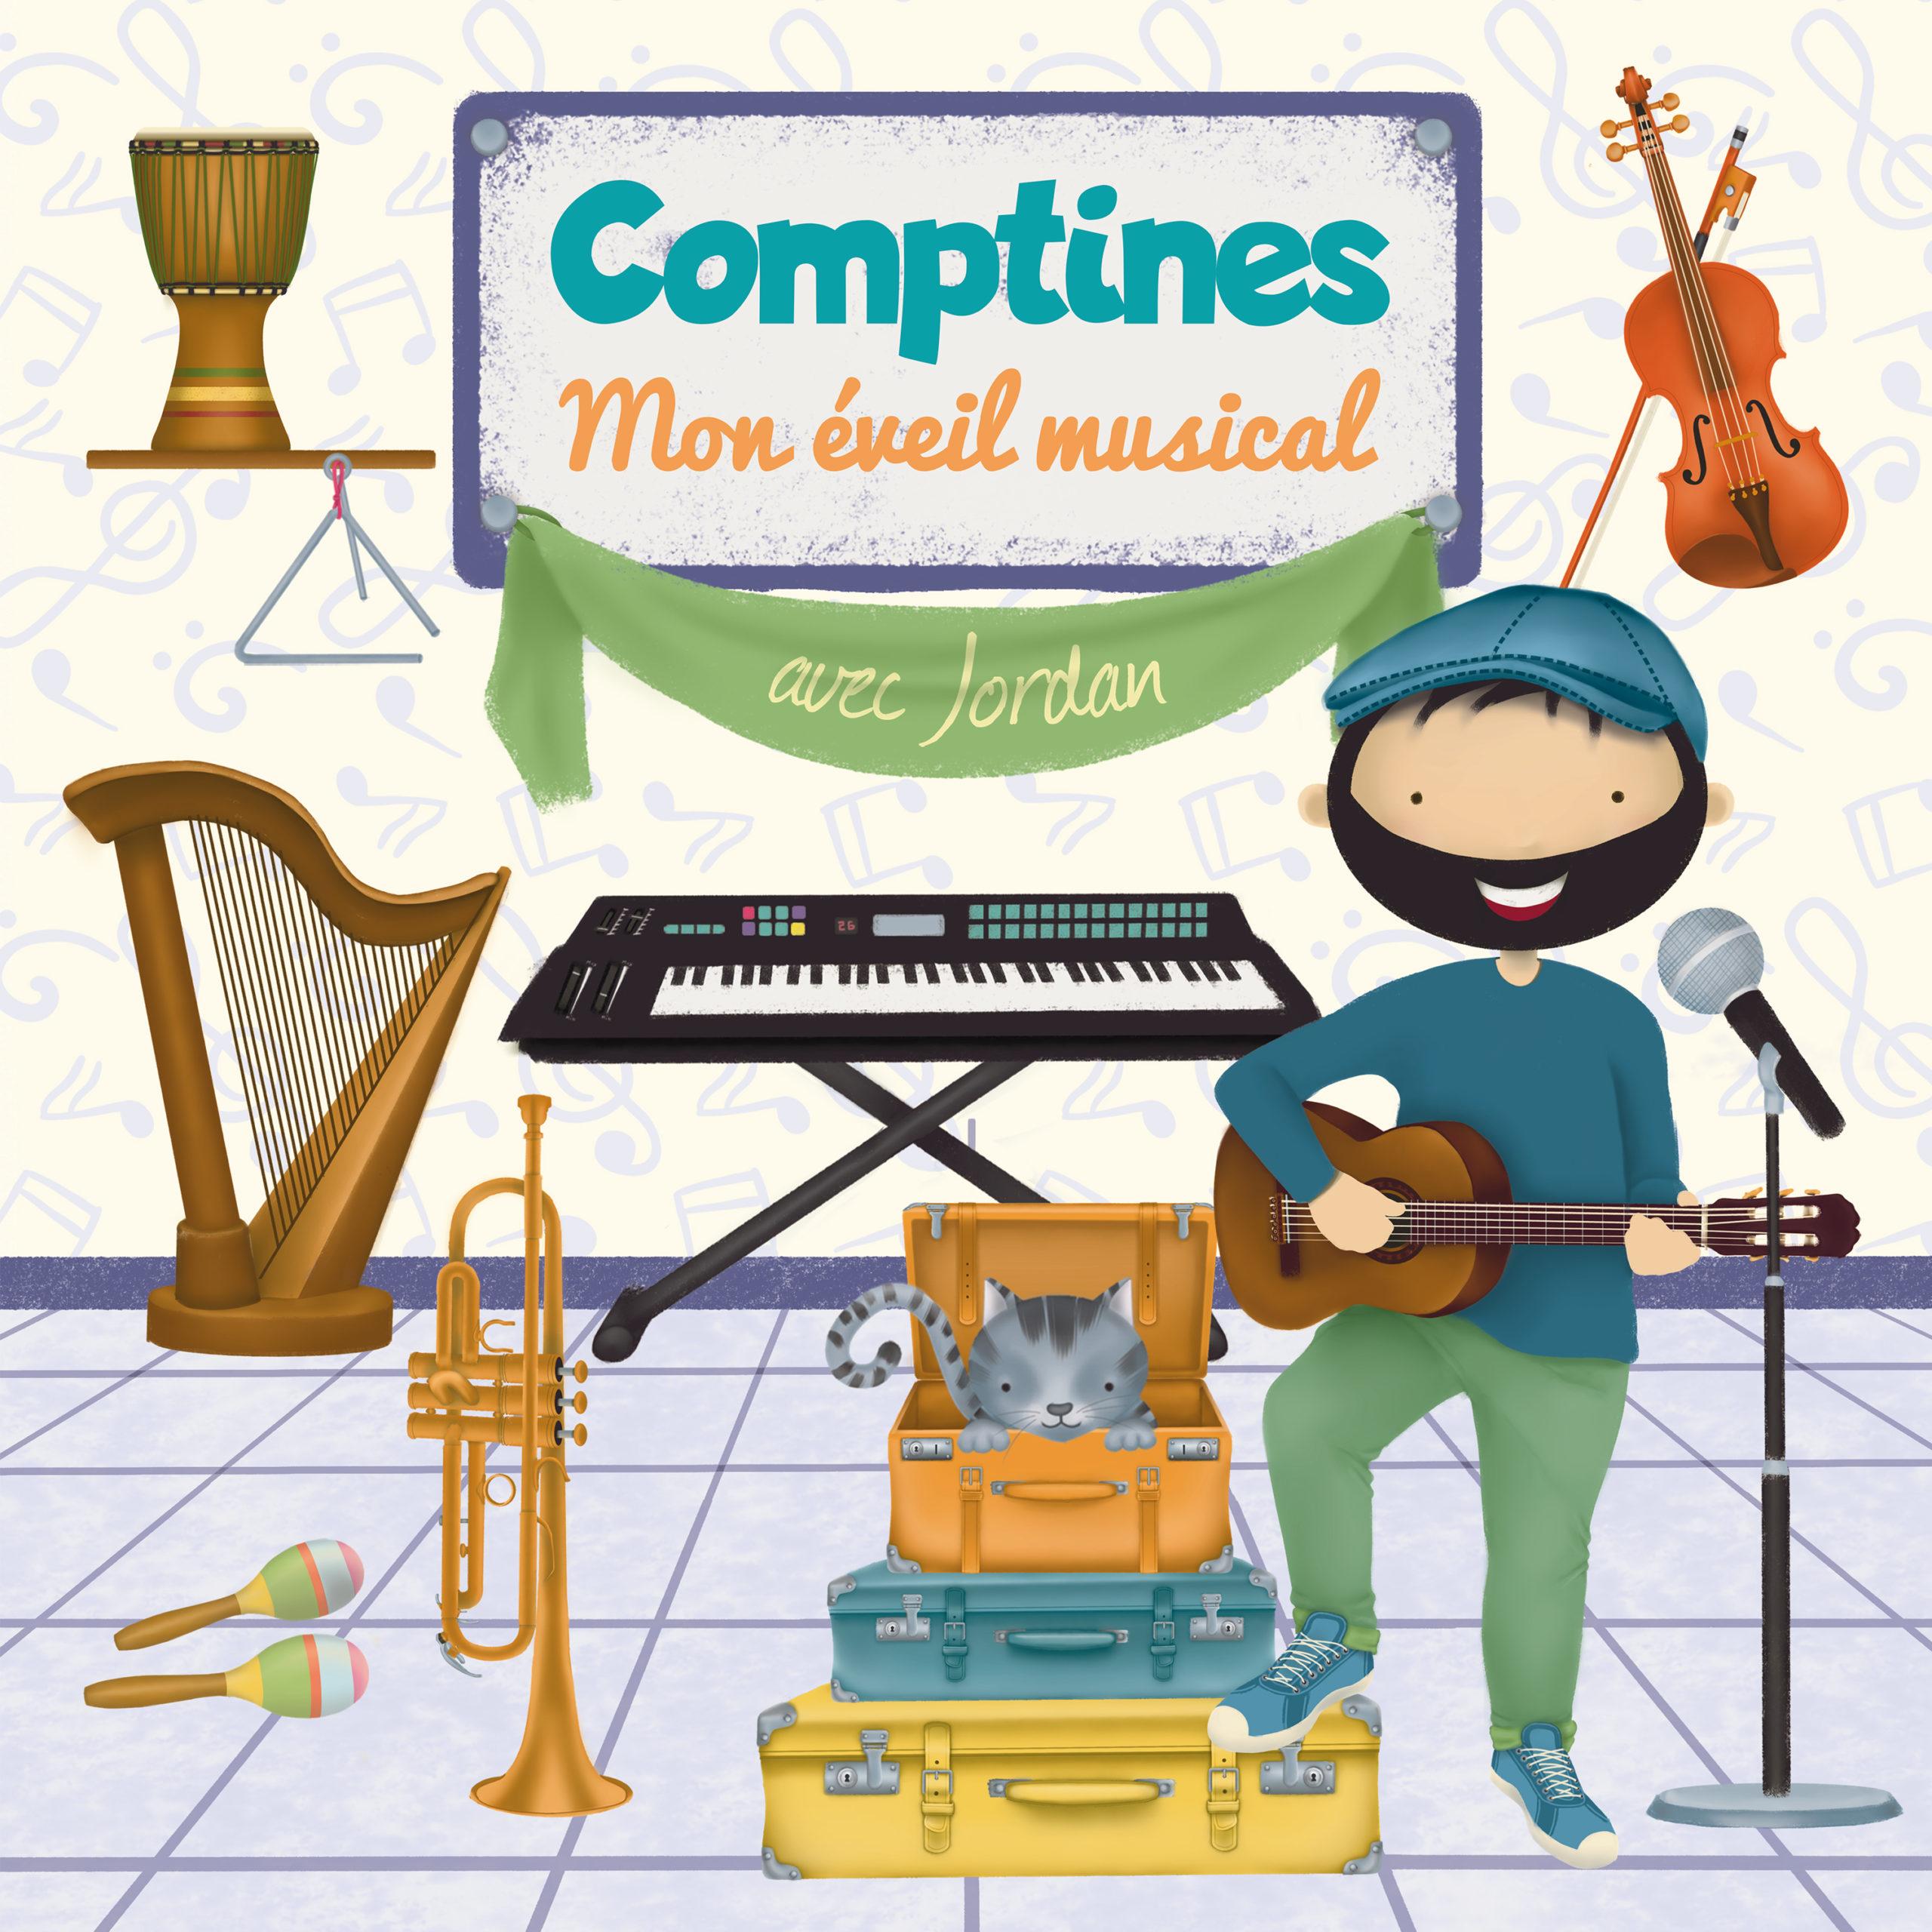 KIDS - 60 COMPTINES POUR L EVEIL MUSICAL (1 CD)